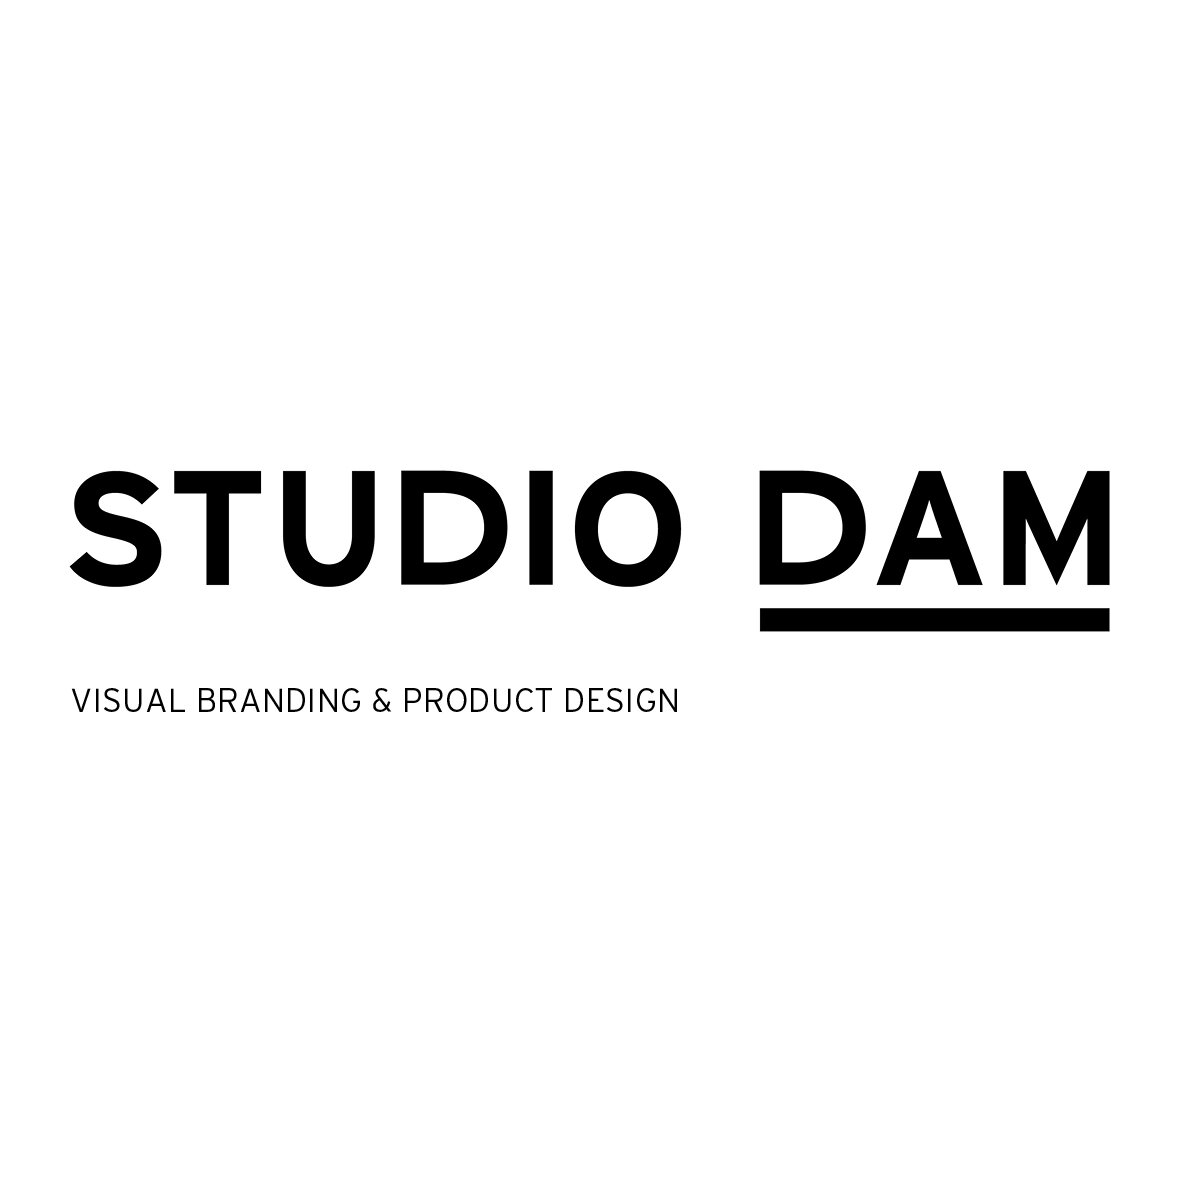 Branding Agency Singapore | STUDIO DAM Design